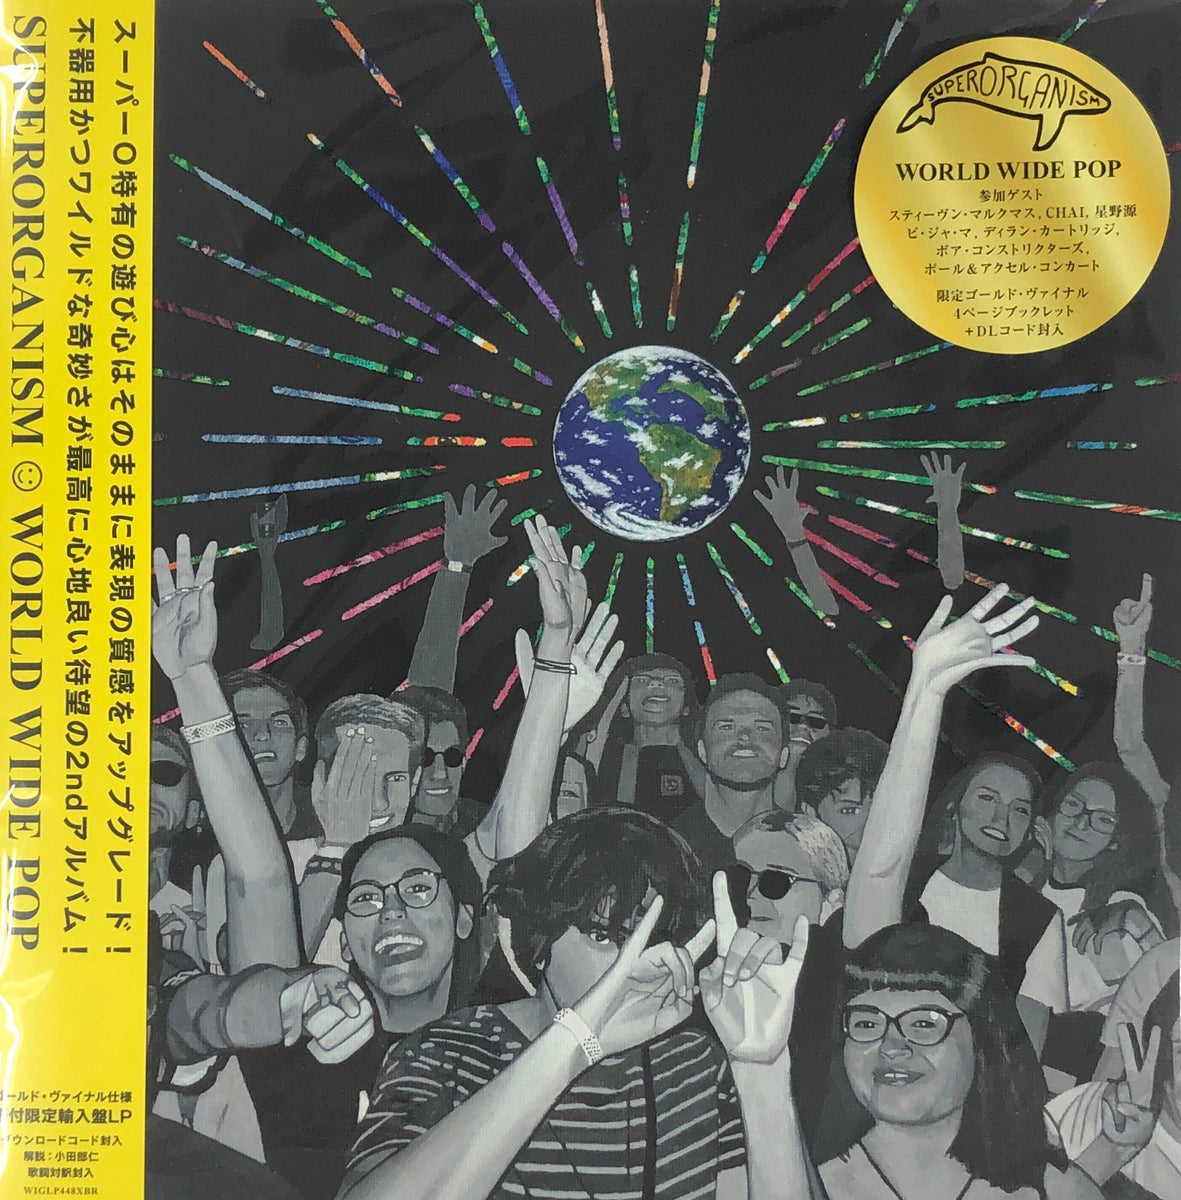 SUPERORGANISM / World Wide Pop (限定帯付ゴールド・ヴァイナル)LP 